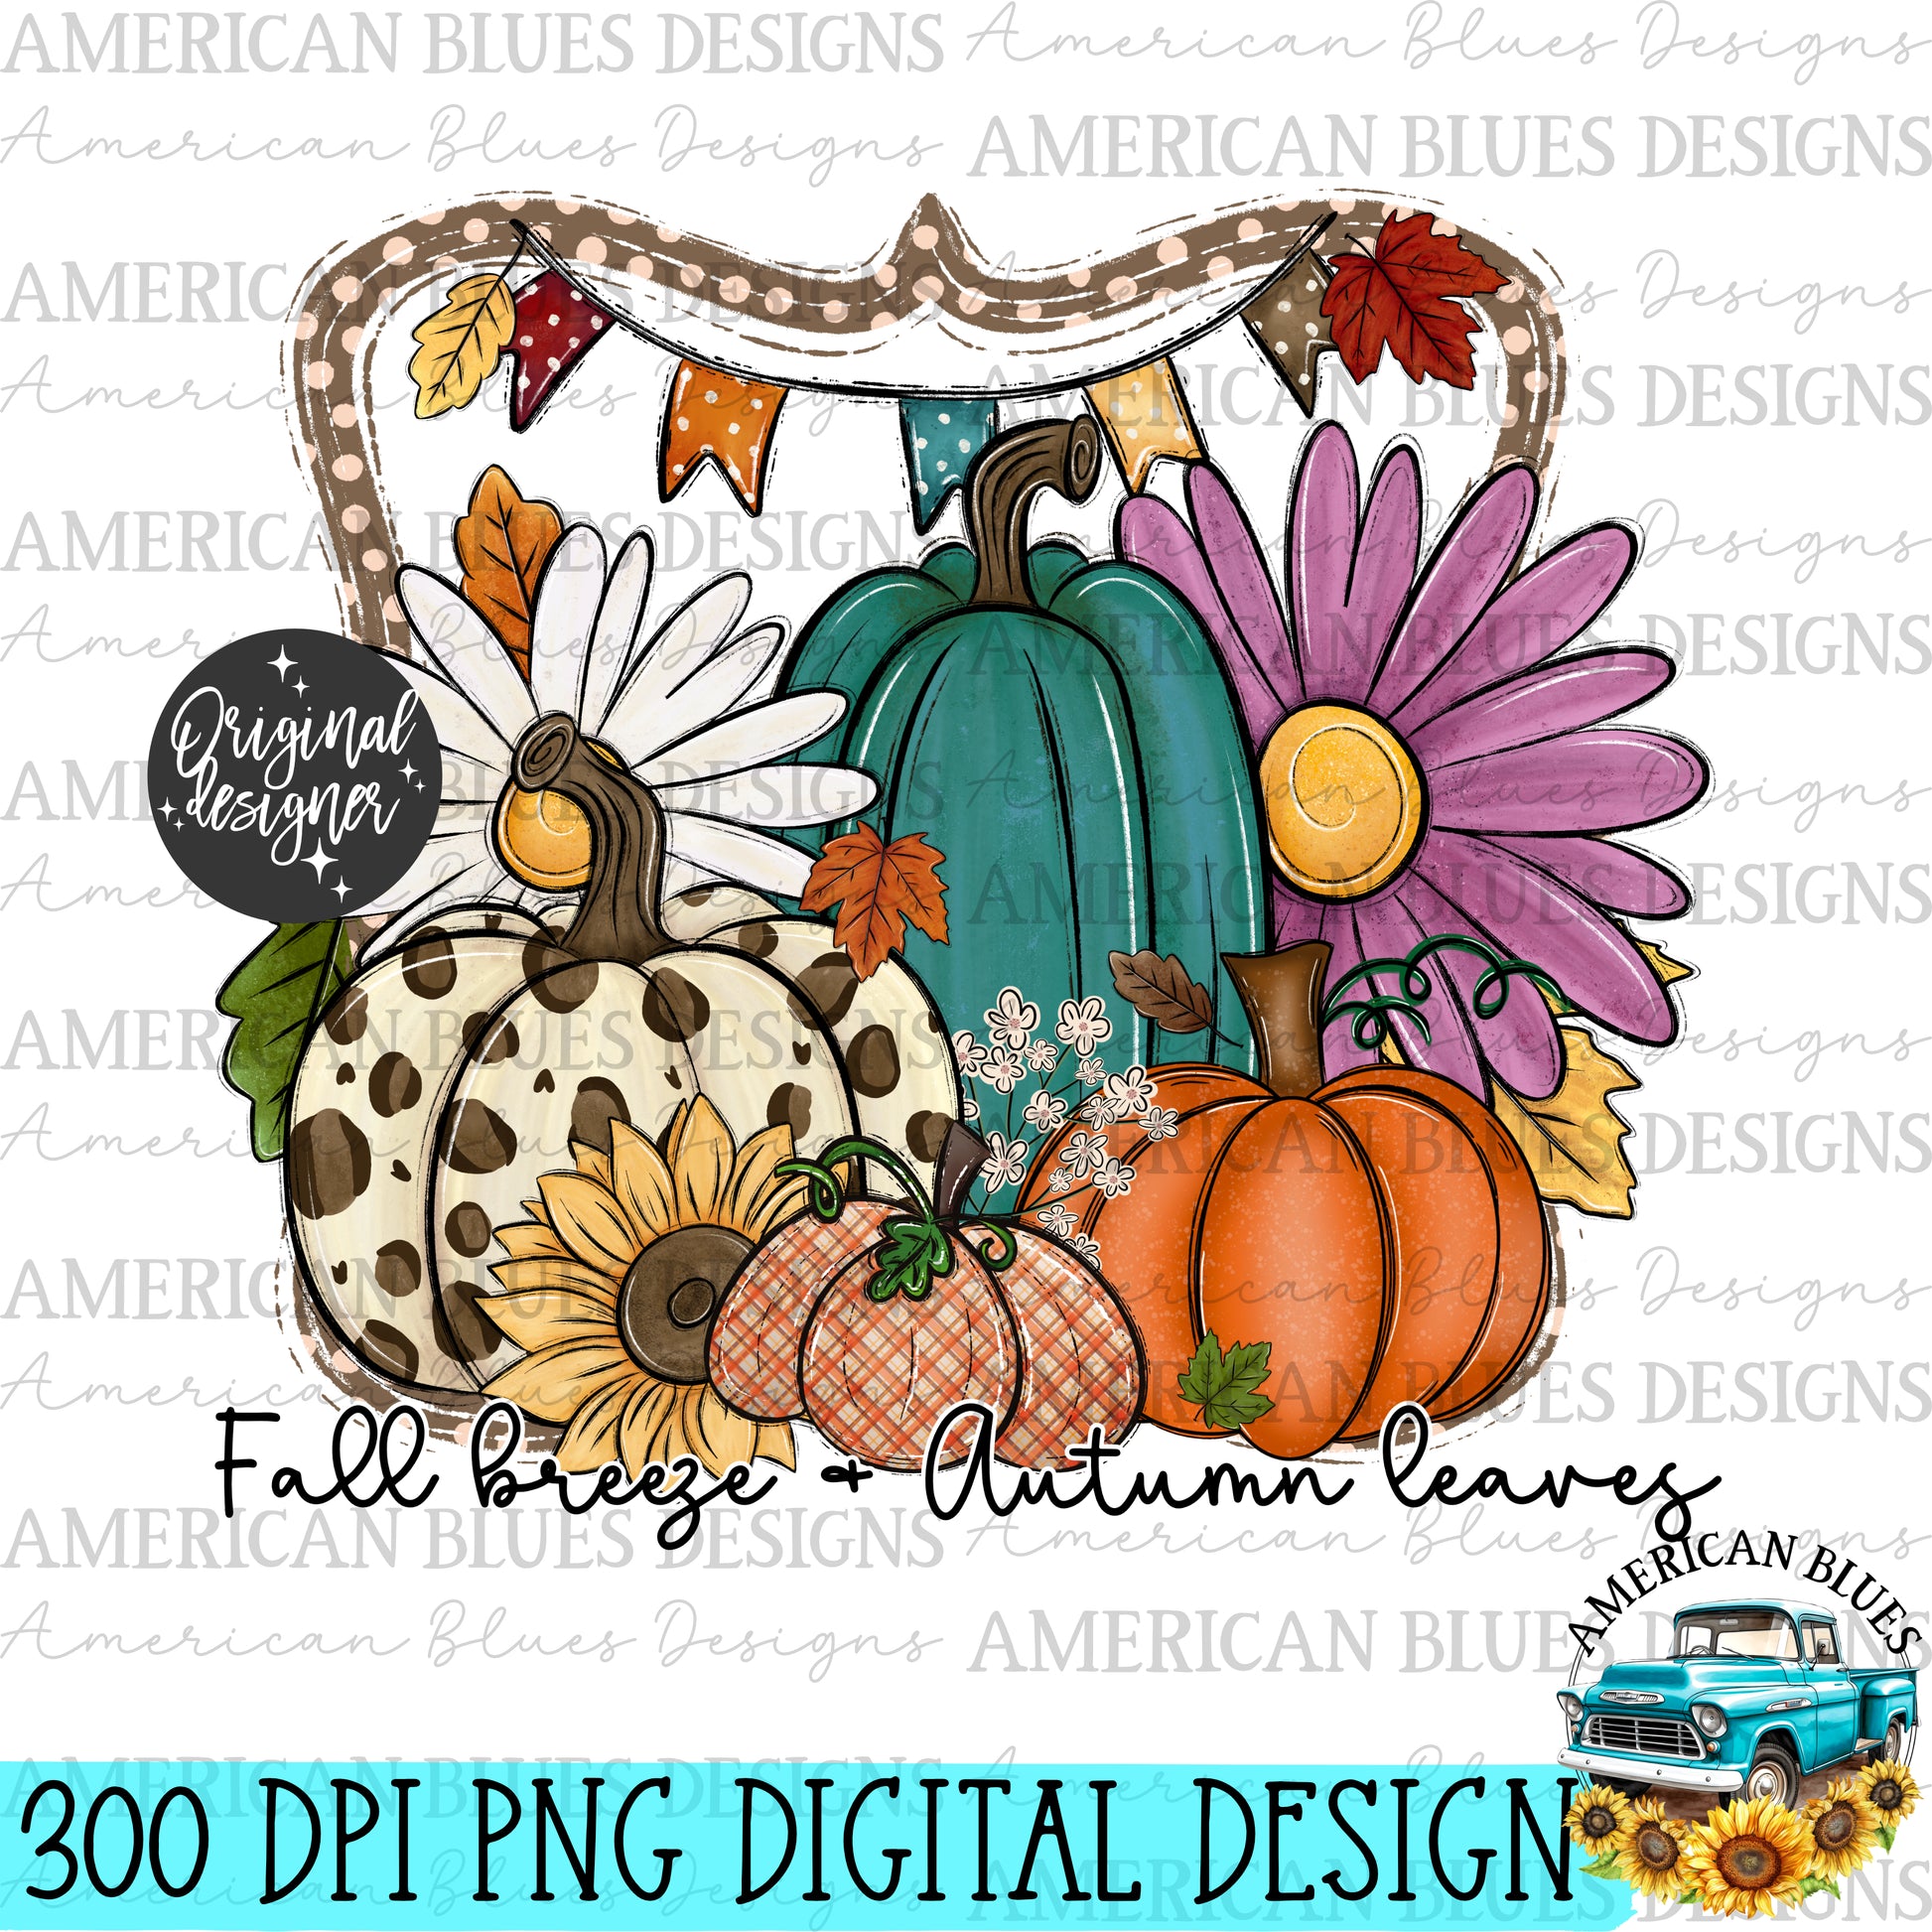 "fall breeze & Autumn leaves" digital design | American Blues Design